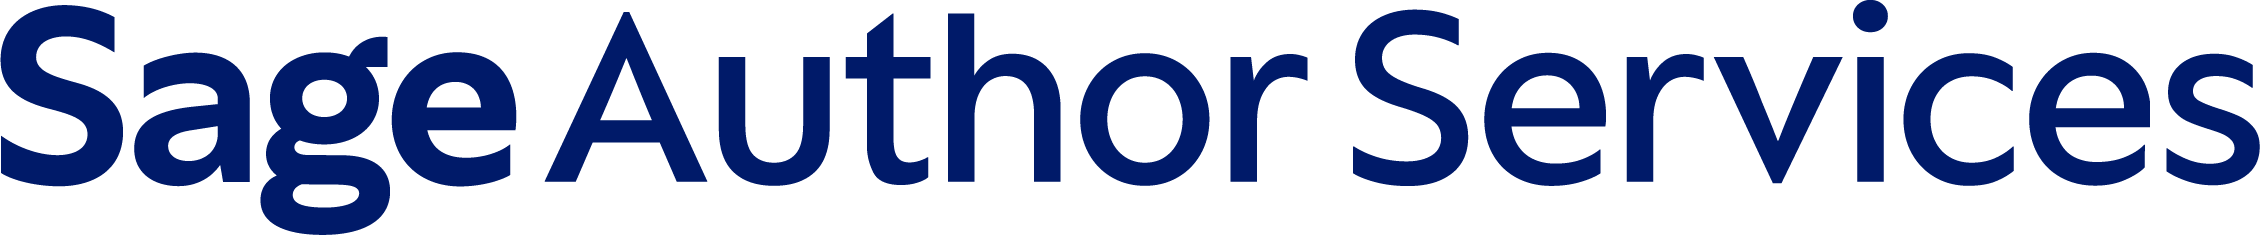 Sage Author Services logo